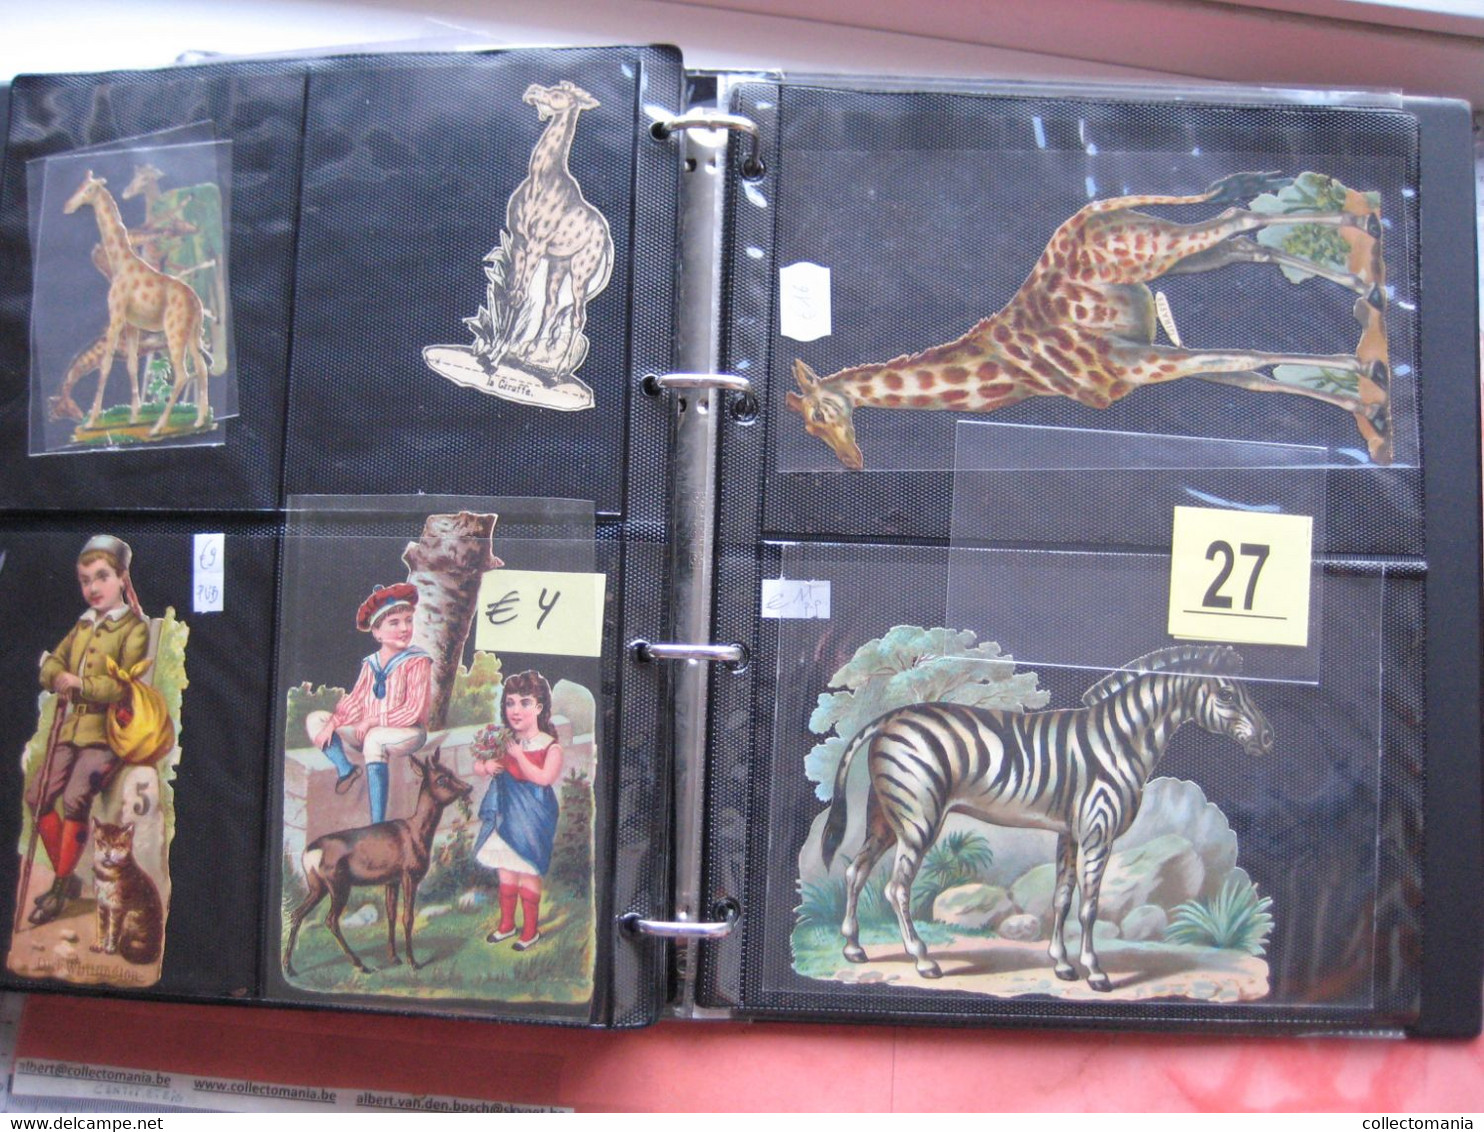 19th century each chromo fotograped (count yourself ) SCRAPS MAP04- fish, tiger, hunter, indians GLANS BILDER, PRE 1900